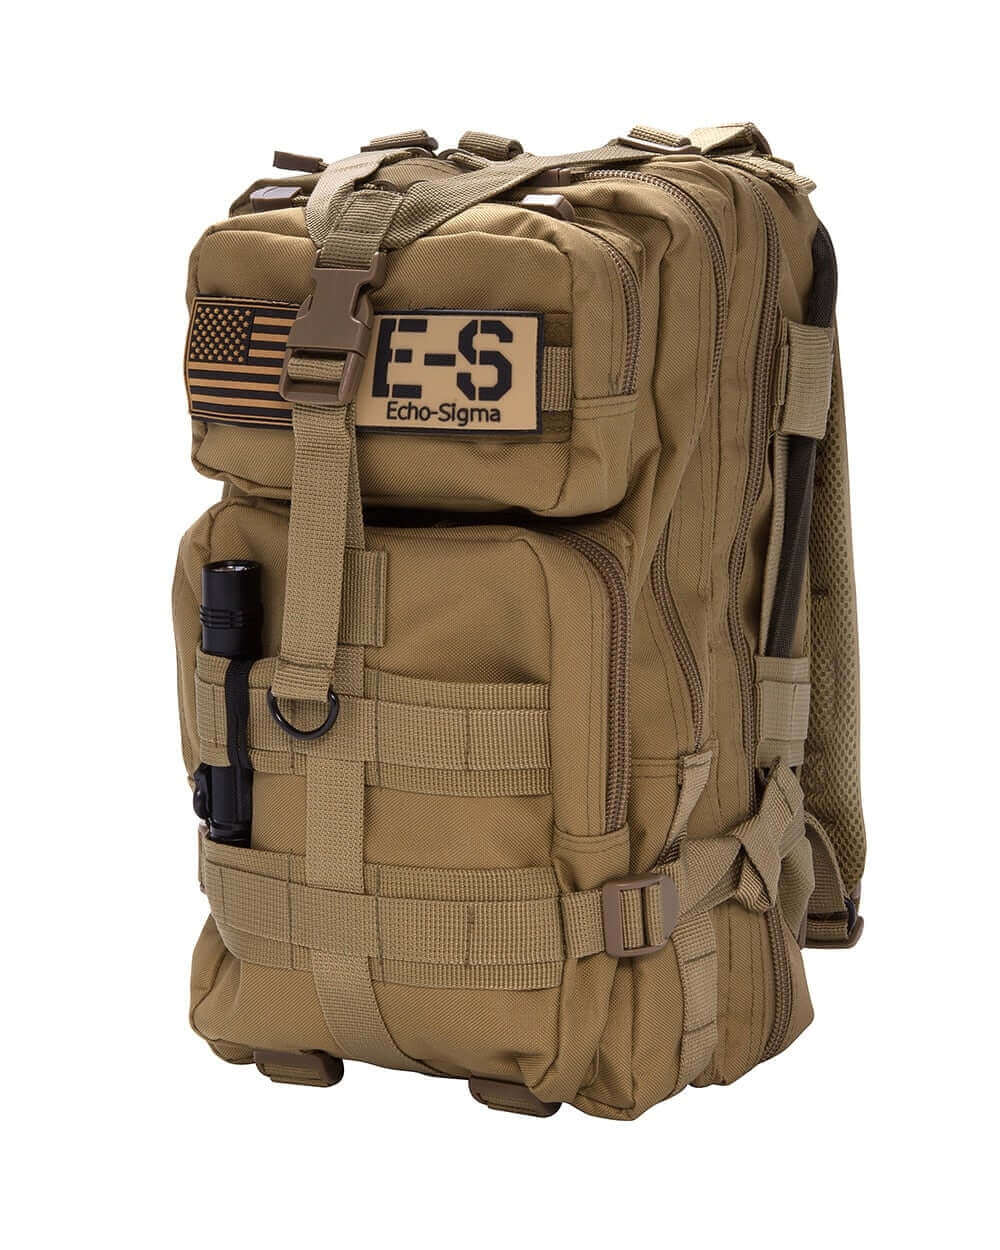 Echo-Sigma H.E.R.O. Bag - Ultimate Survival Kit - Echo-Sigma Emergency Kit - High Quality Bug Out Bag